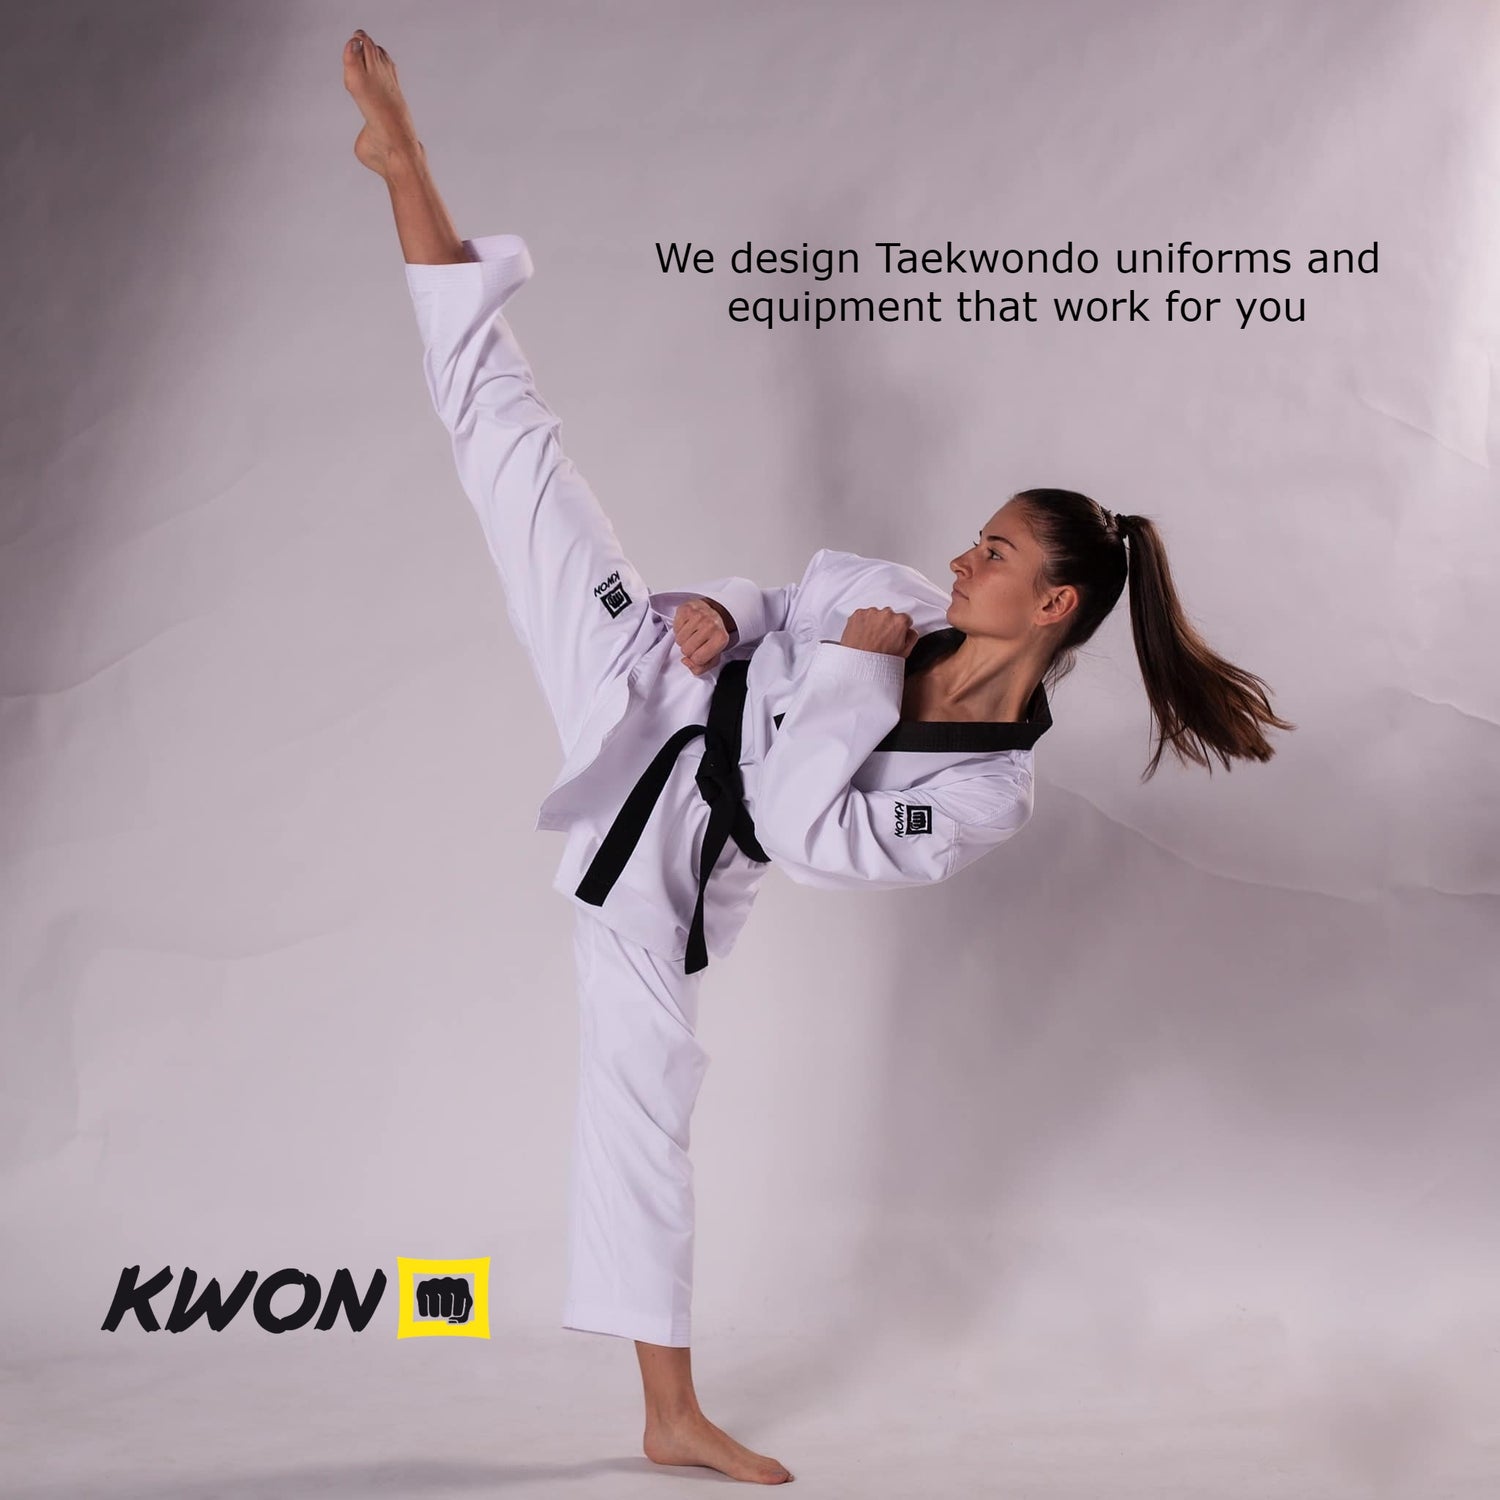 KWON designing Taekwondo uniforms and equipment that work for you